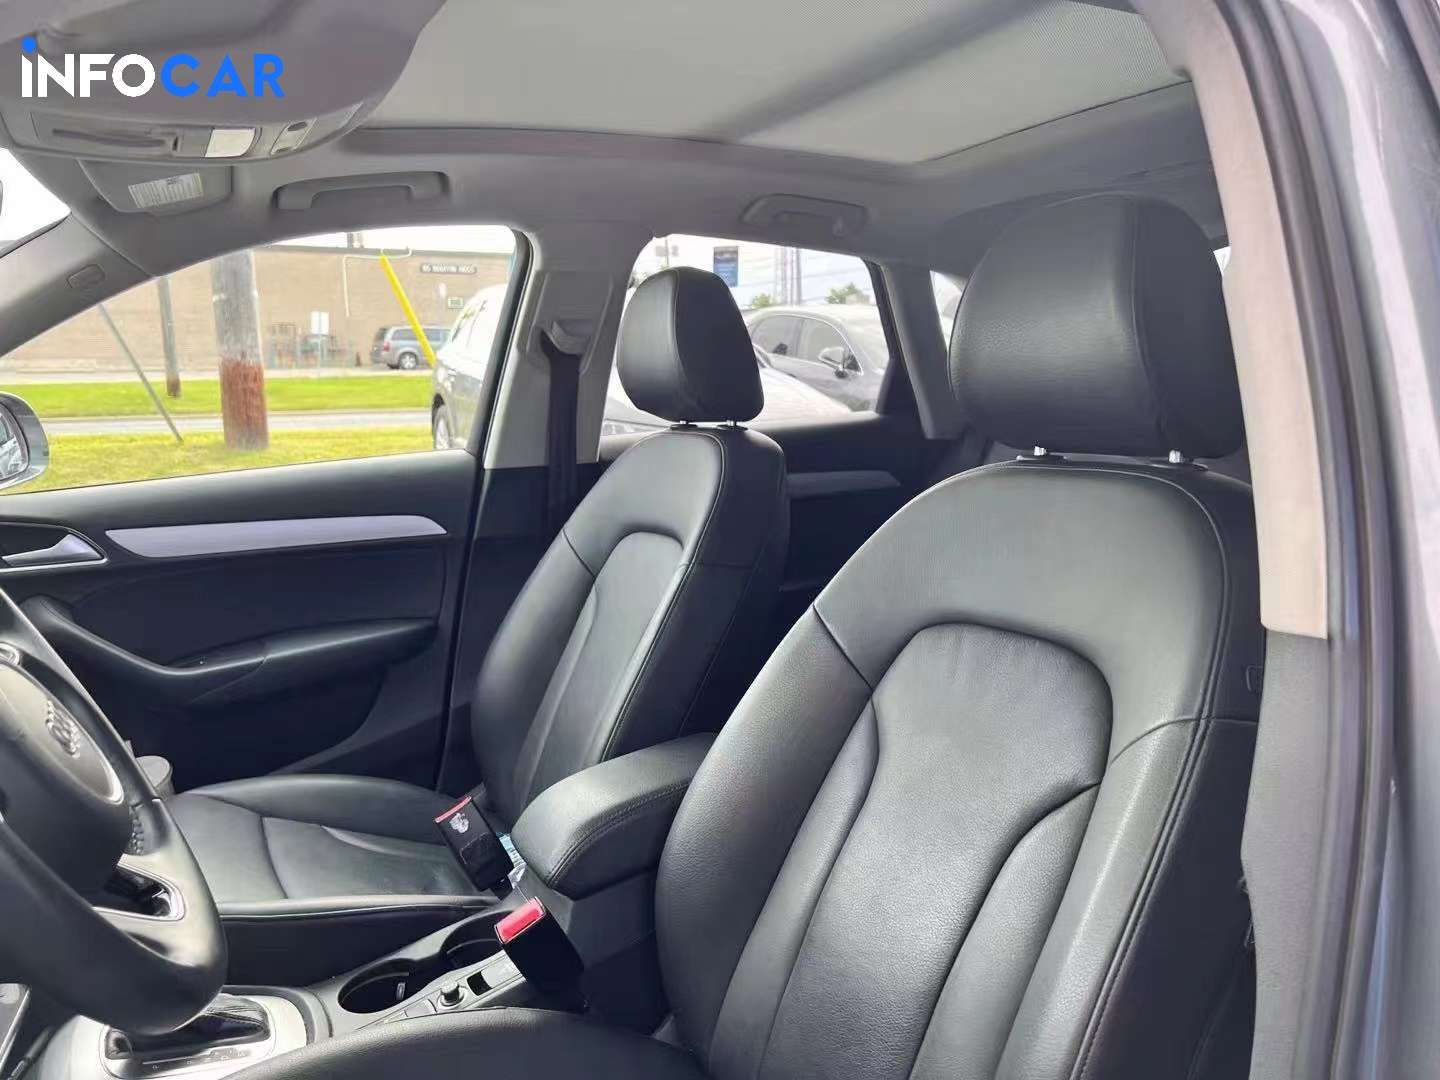 2016 Honda Civic LX - INFOCAR - Toronto Auto Trading Platform